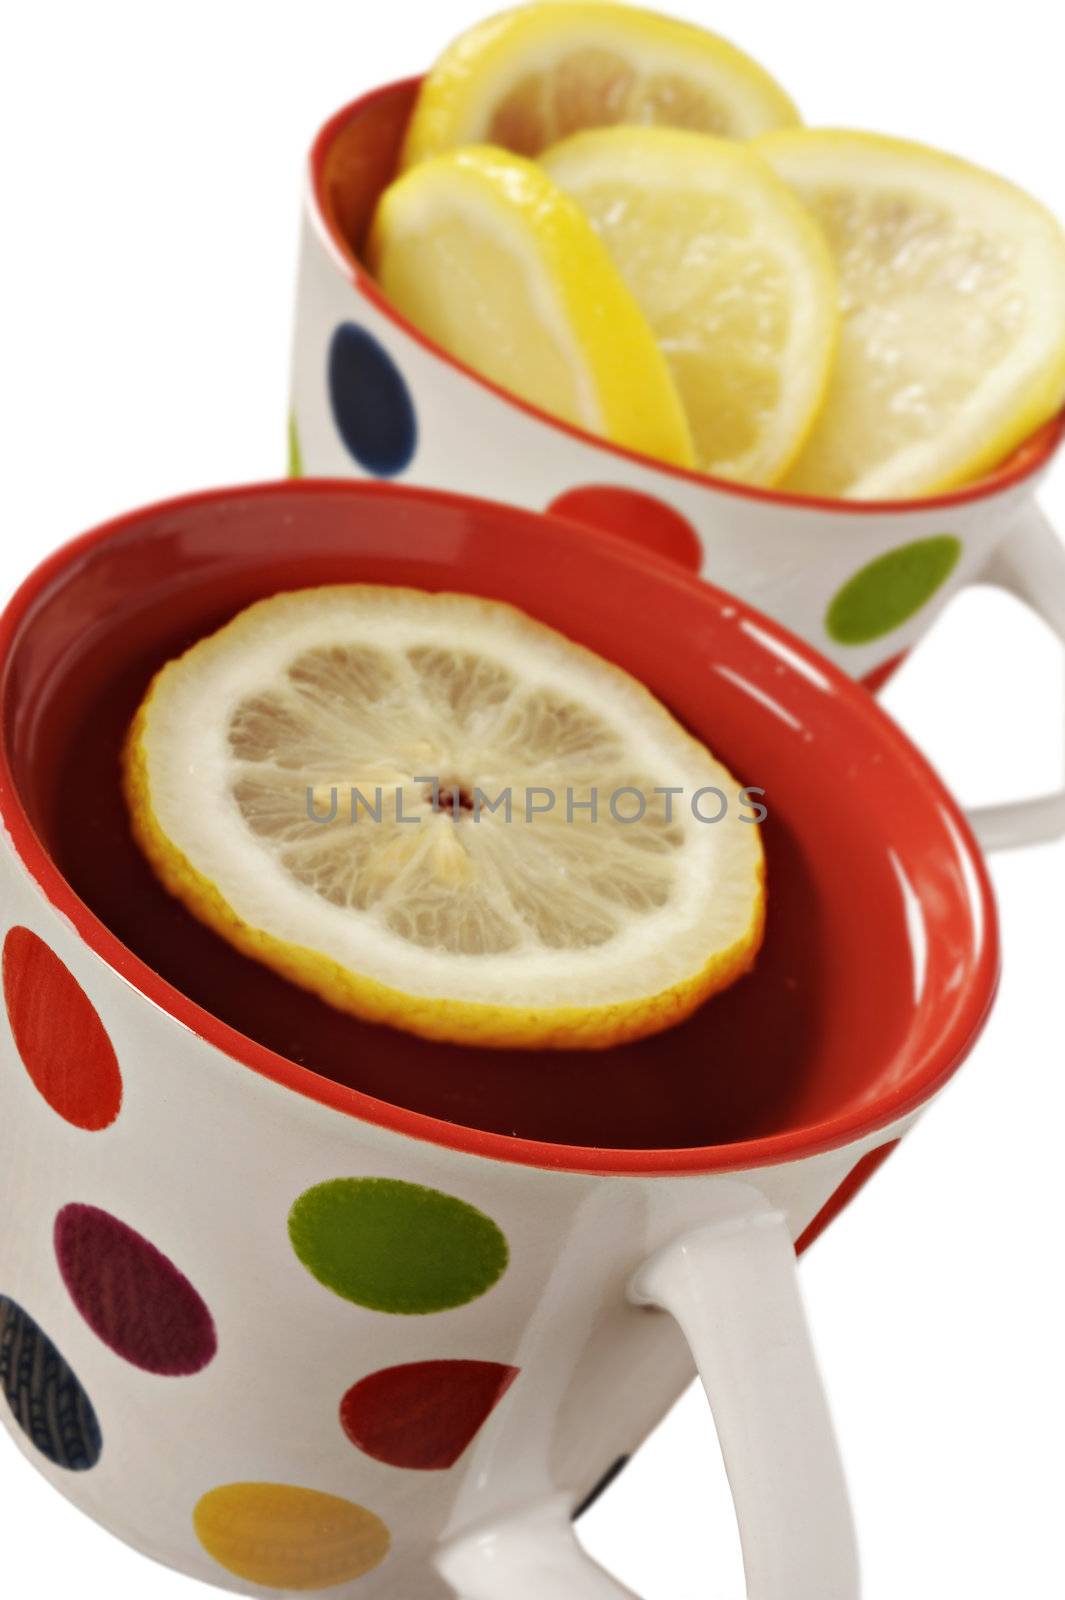 Healthy herbal tea with lemon in polka dot cups by tish1